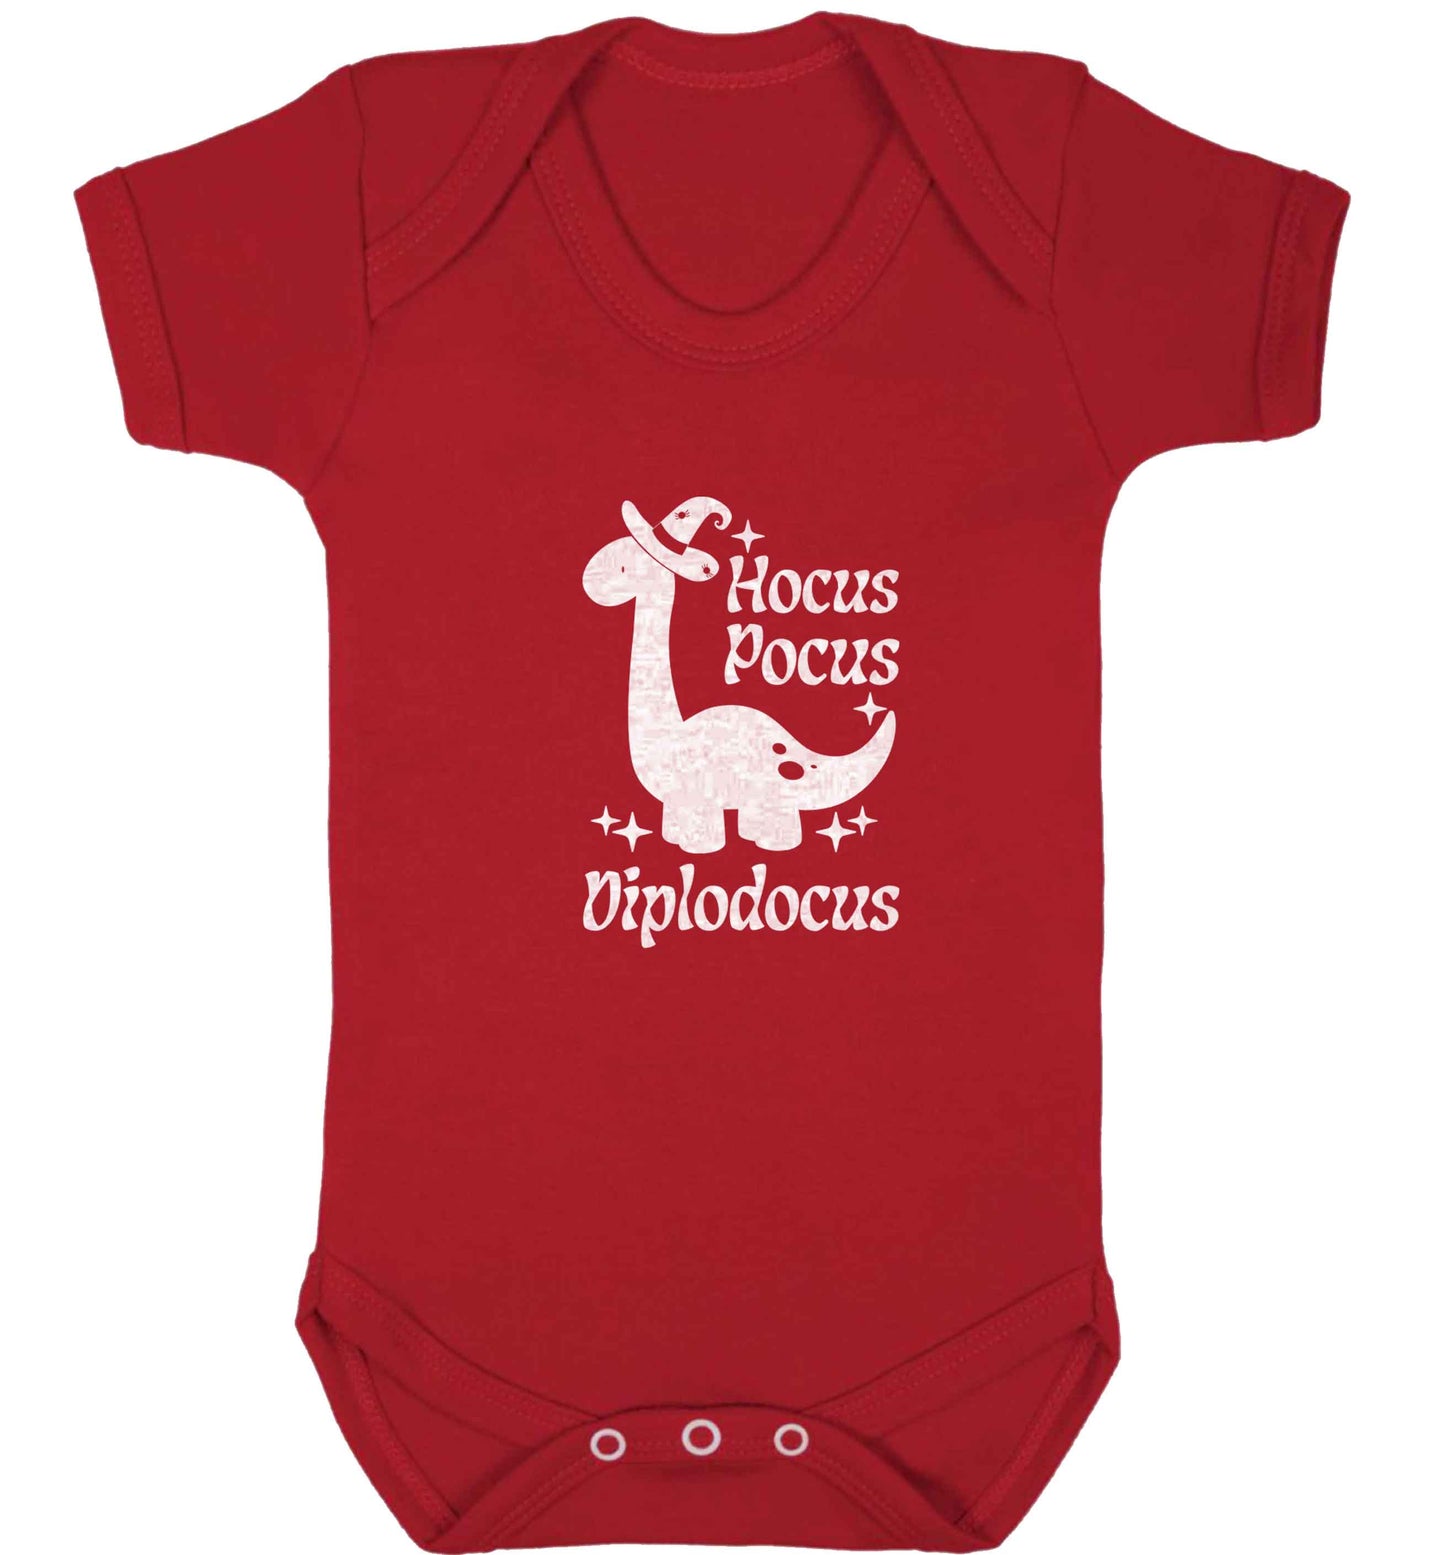 Hocus pocus diplodocus Kit baby vest red 18-24 months